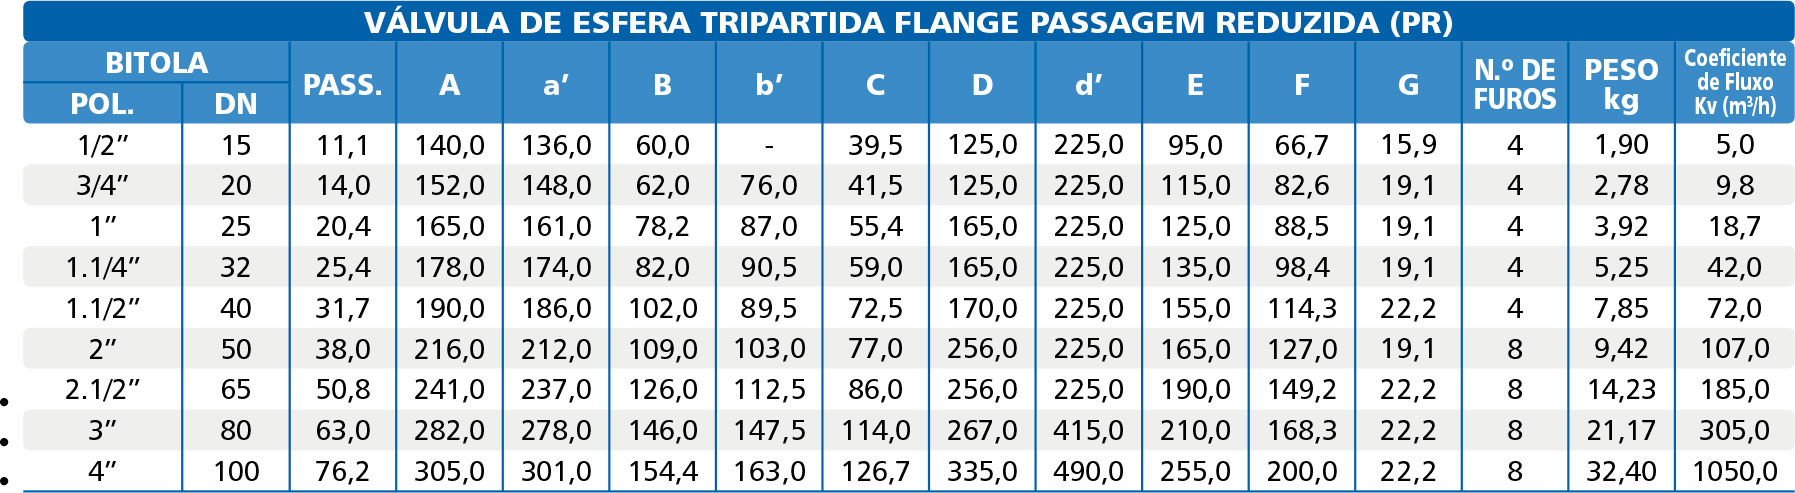 Valvula-de-Esfera-Tripartida-Serie-1000-Flange-Classe-300-Reduzida-tabela